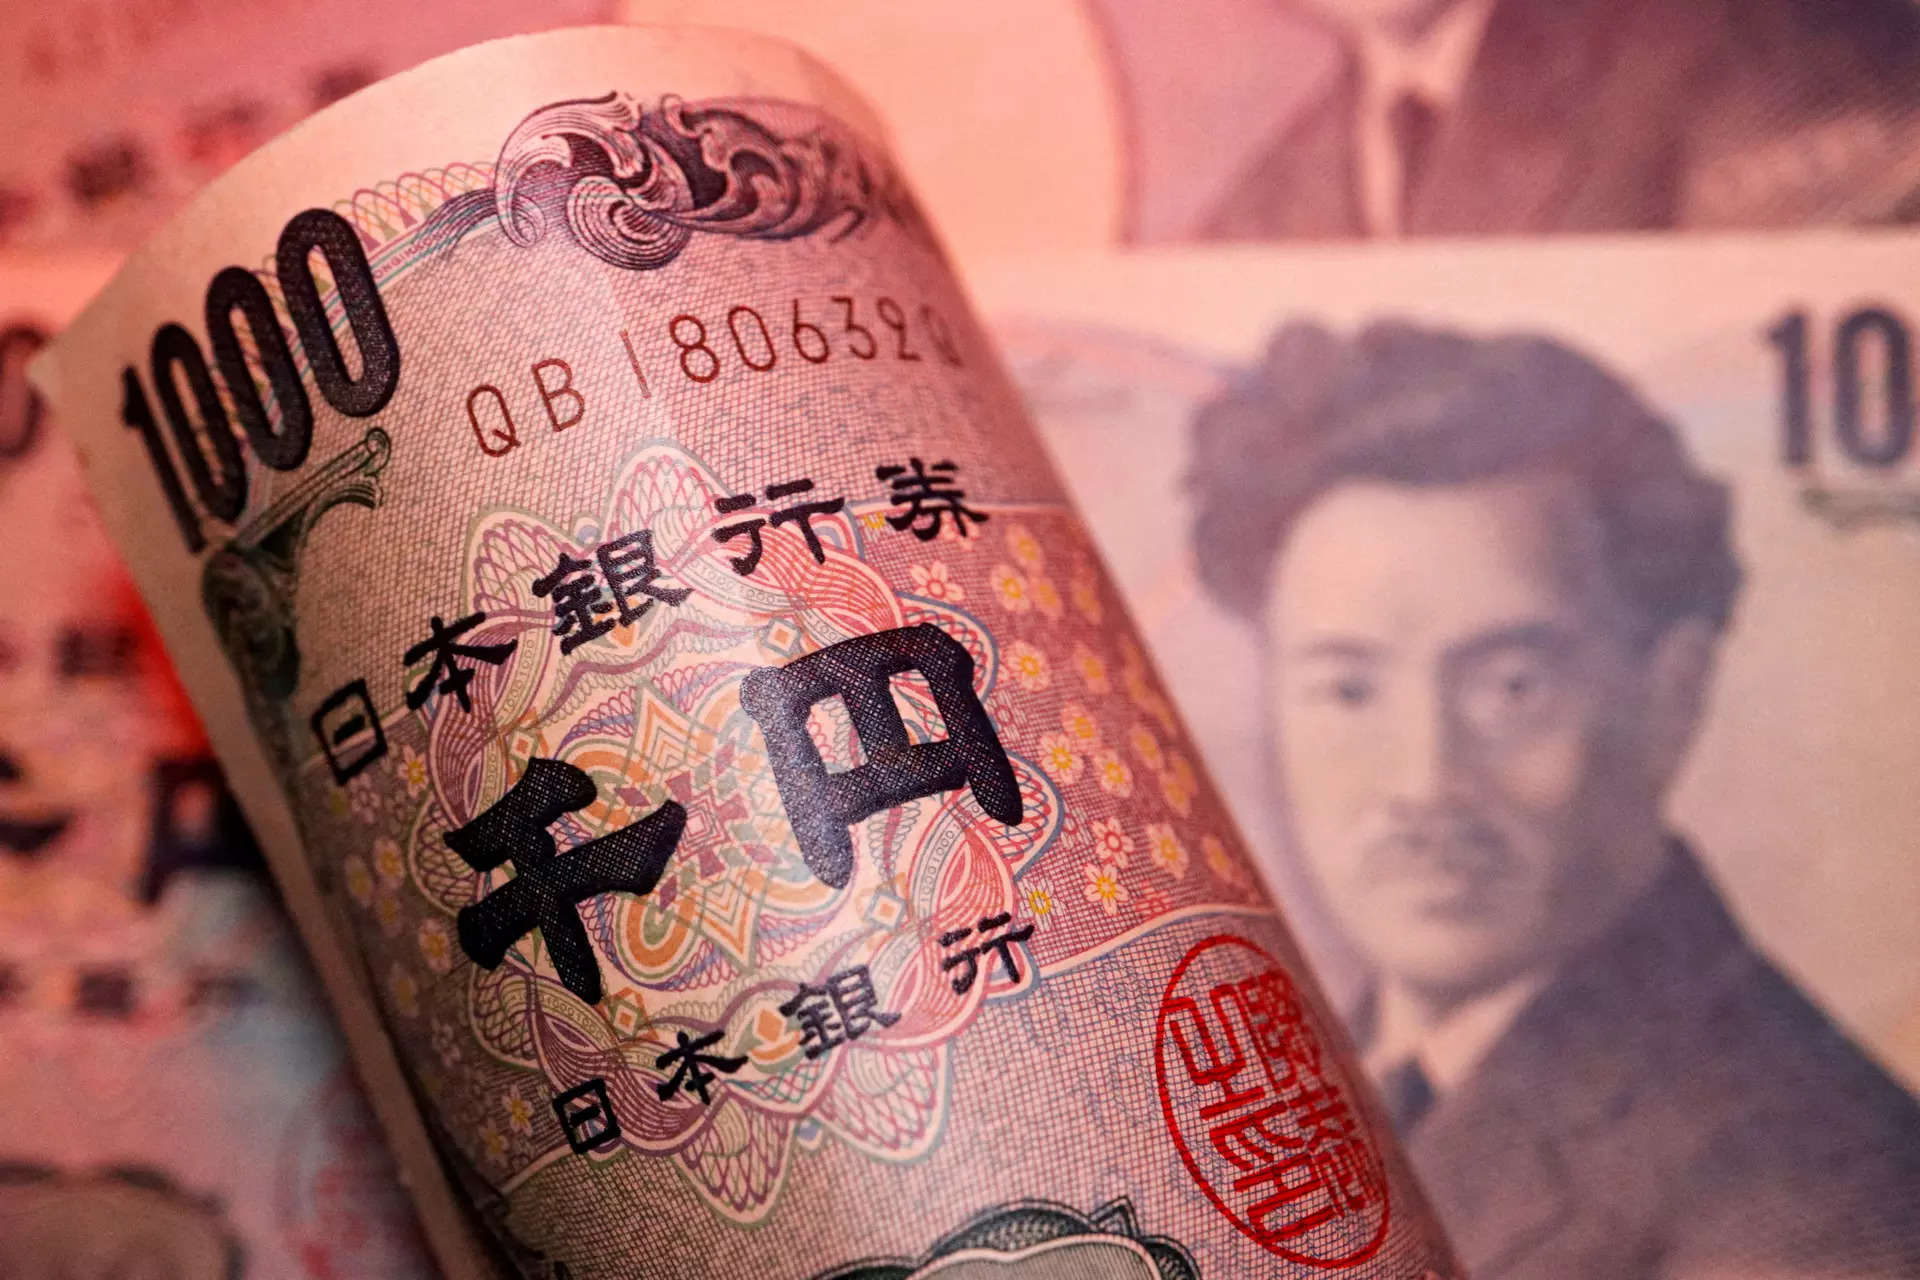 Yen rises as carry trades unwind, risk sentiment takes a hit 